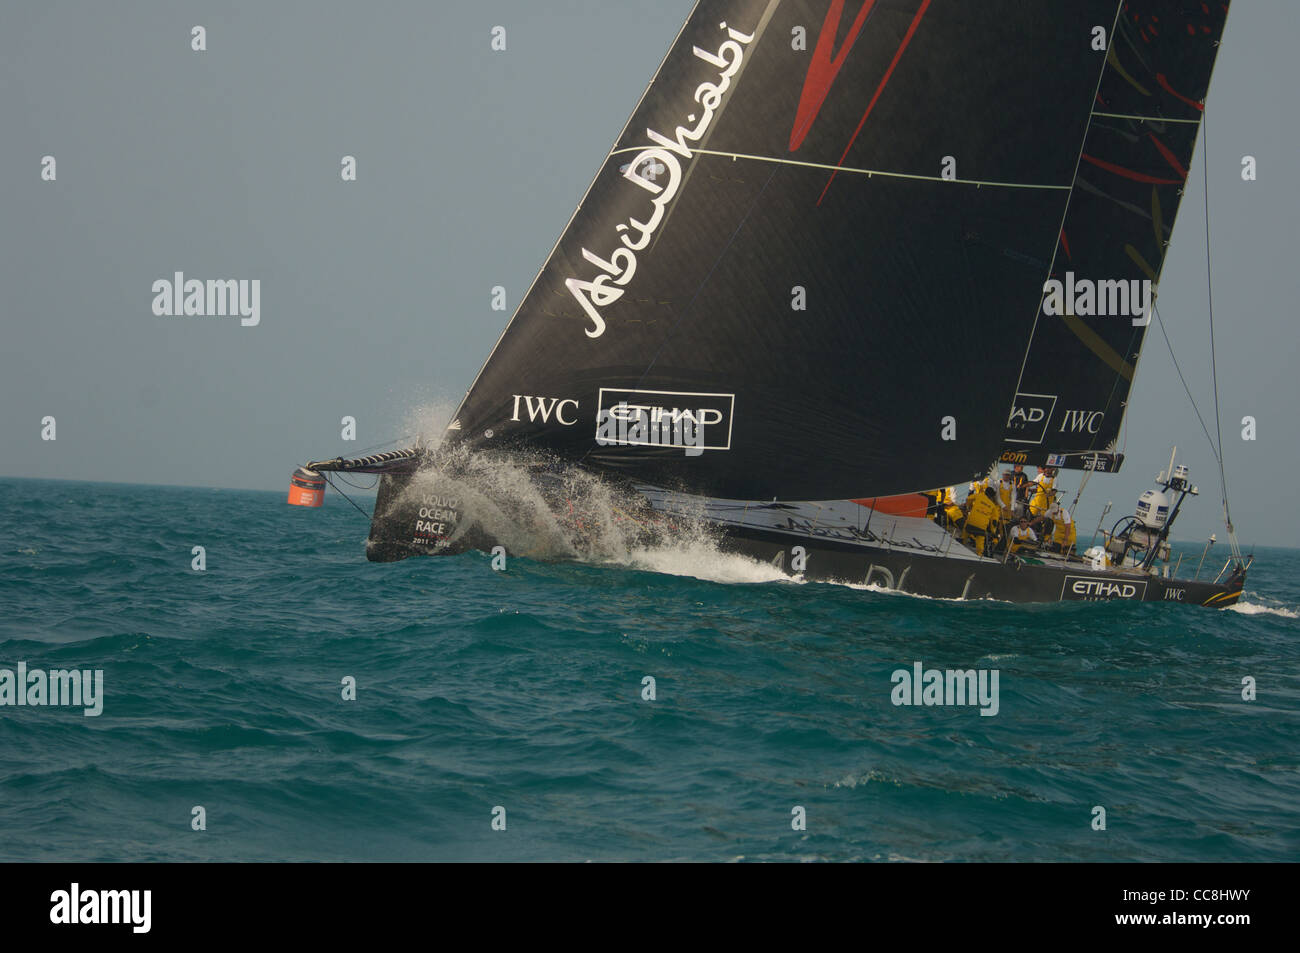 14.01.2012, Abu Dhabi. Volvo Ocean Race, gamba 3 gara, abu dhabi ocean racing barca, skipper Ian WALKER Foto Stock